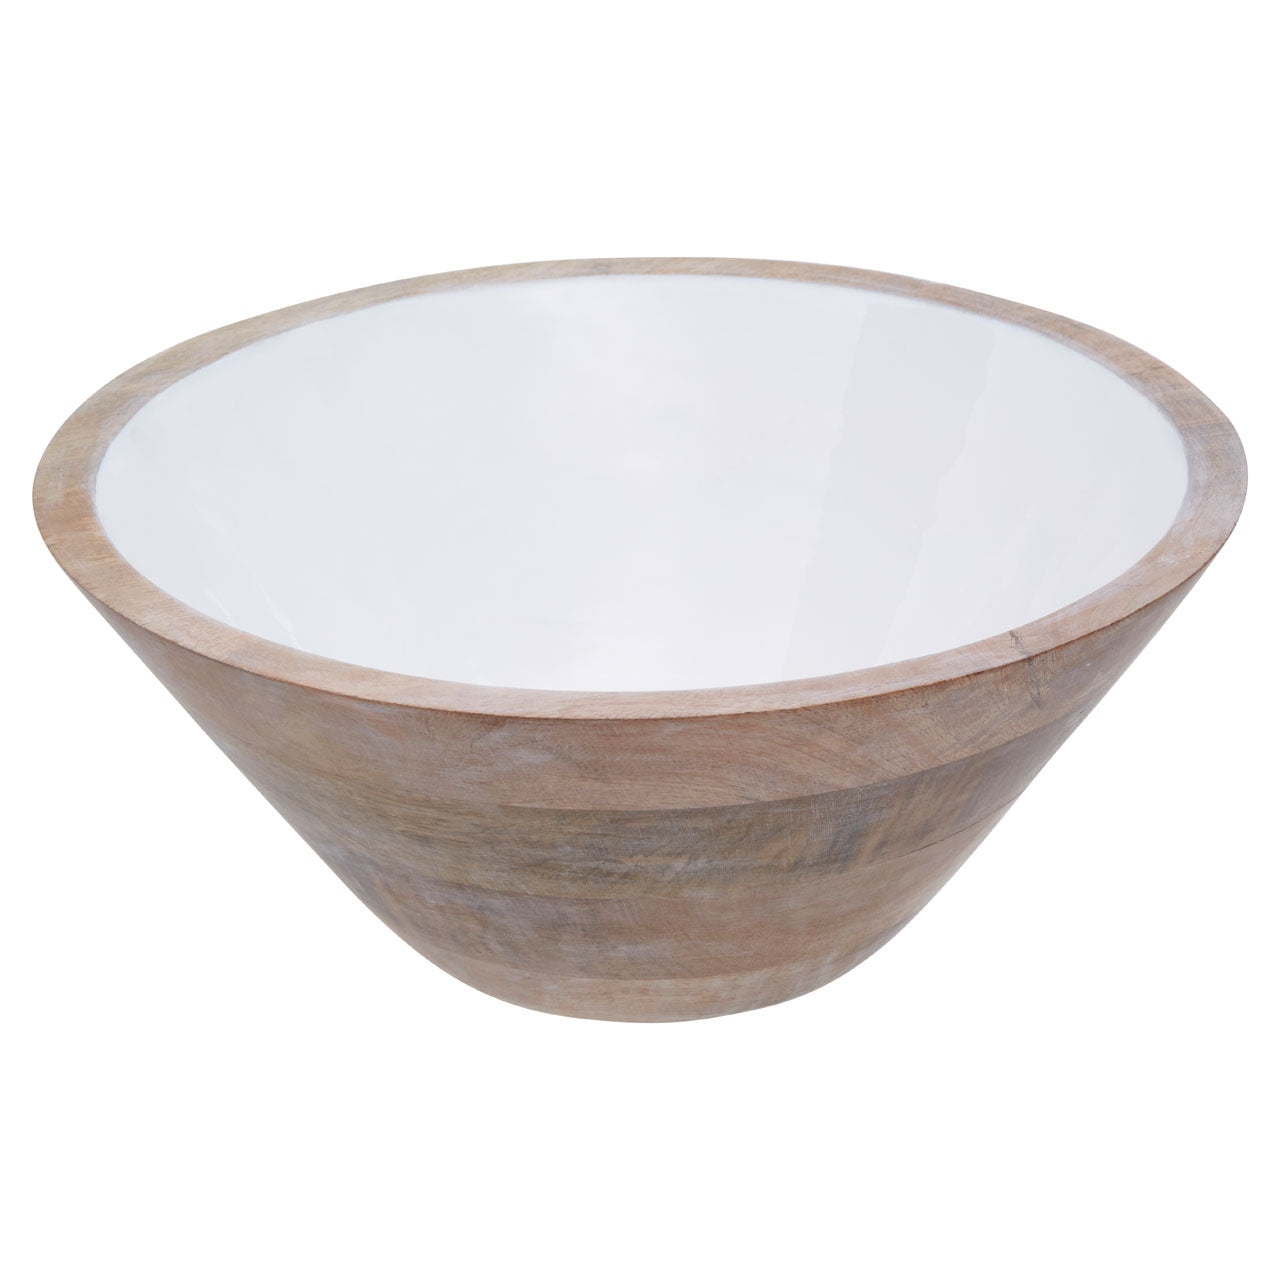 Olivias Kira Small Rounded Bowl In Natural White Enamel